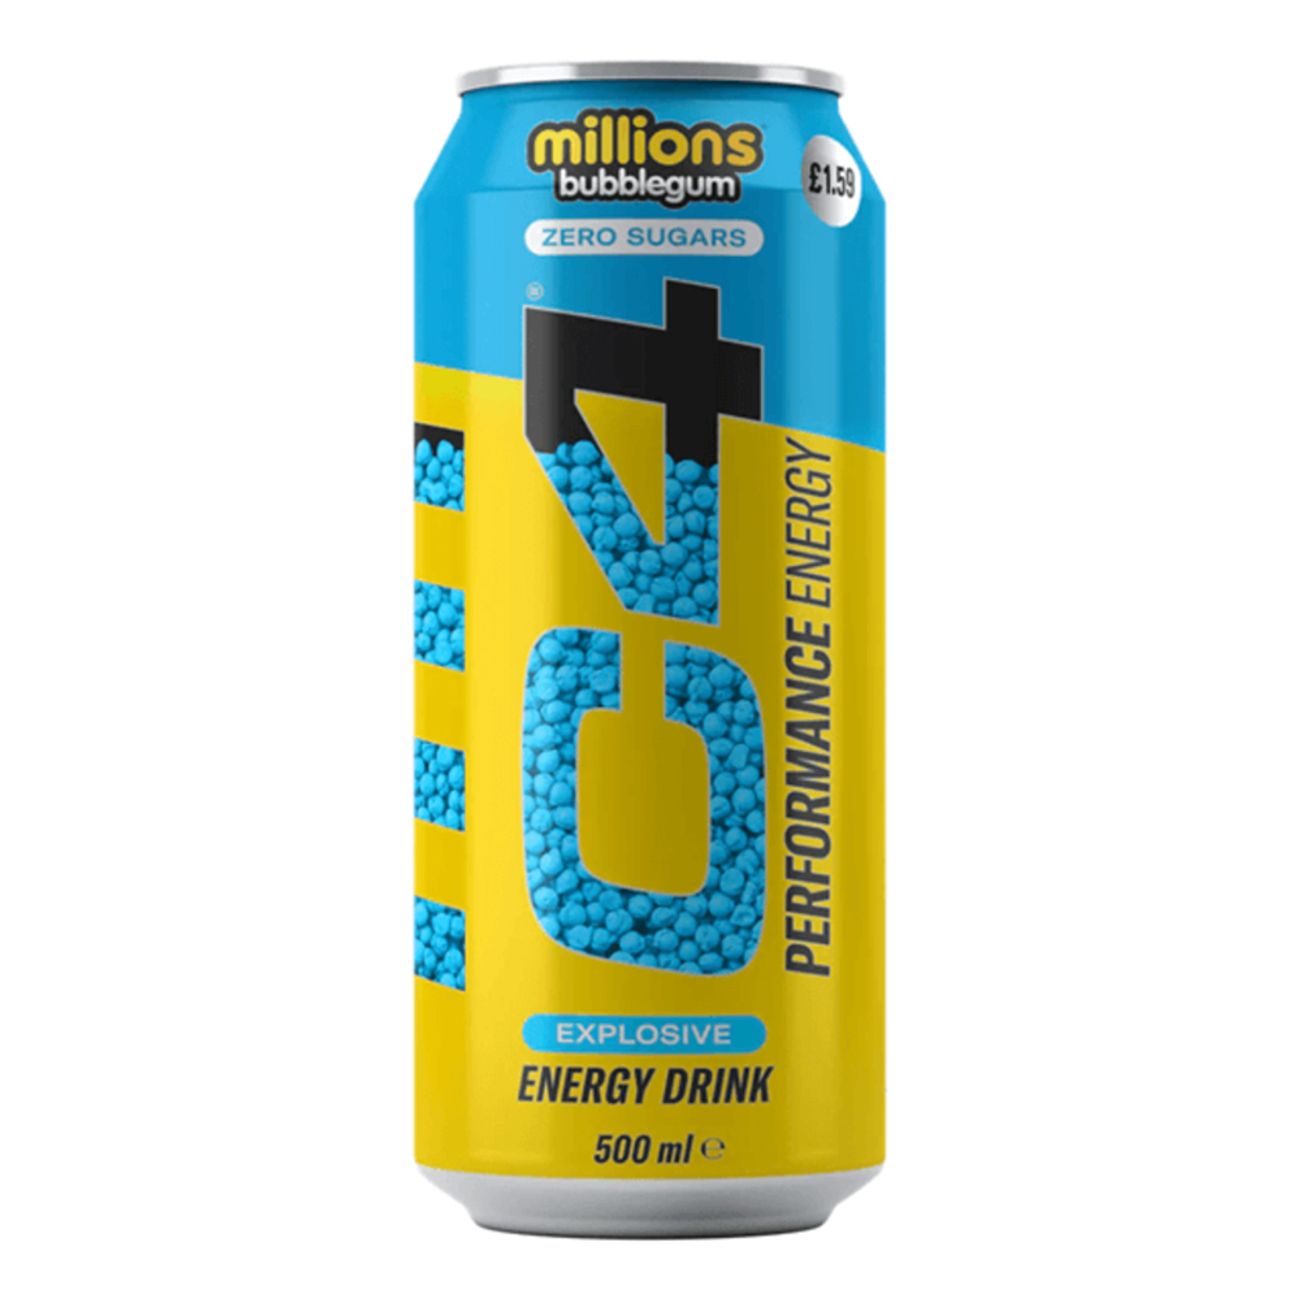 c4-energy-drink-millions-bubblegum-102559-1